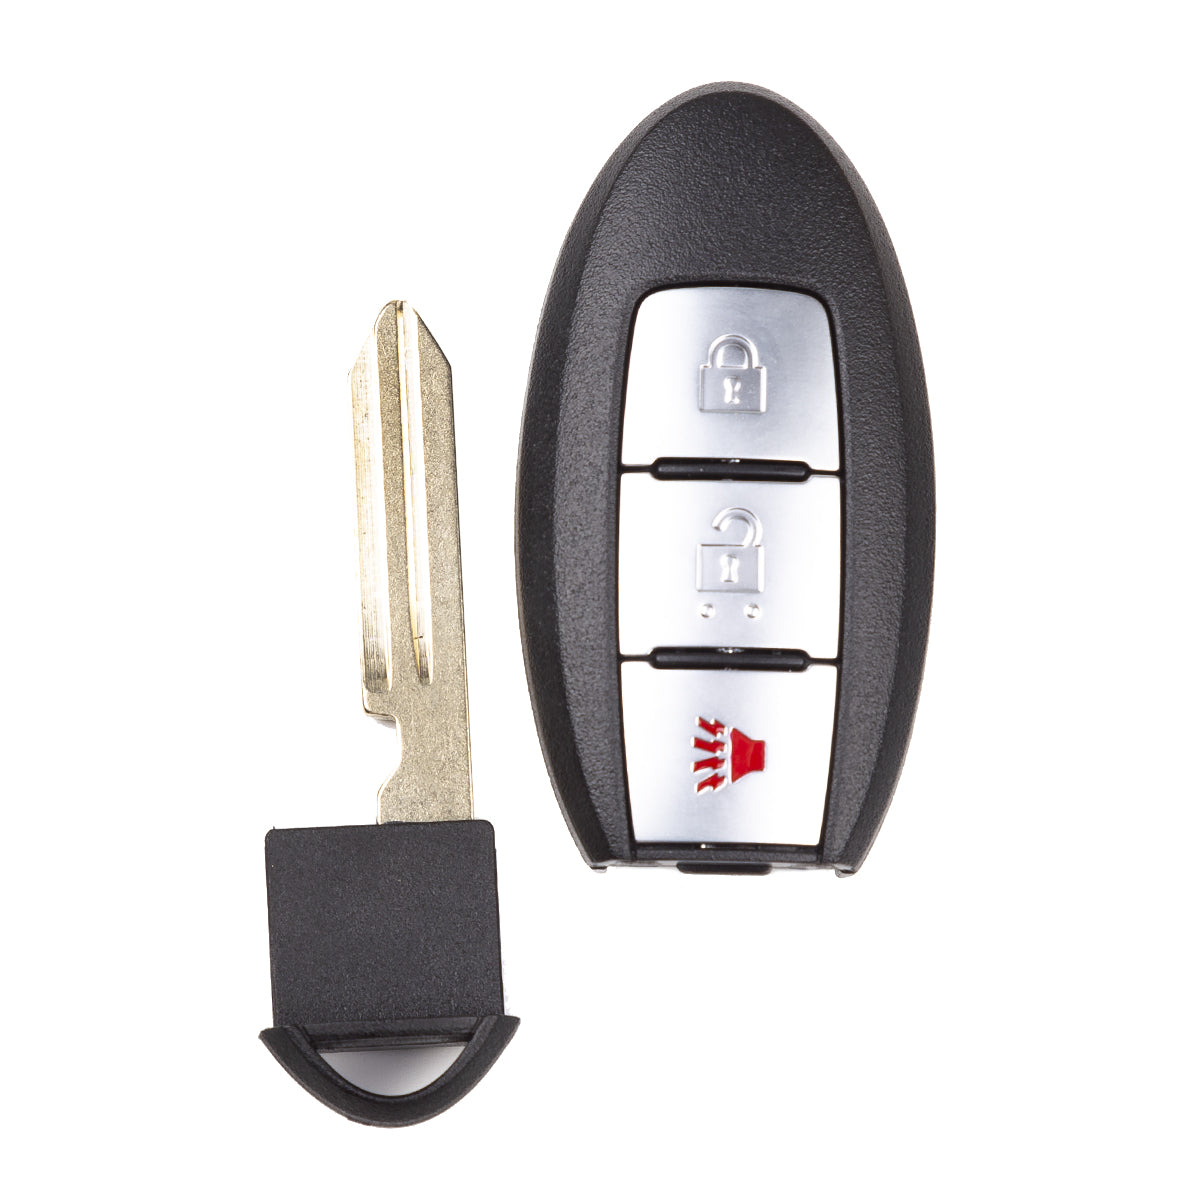 2013 Nissan Cube Smart Key 3 Buttons Fob FCC# CWTWB1U808 - Aftermarket